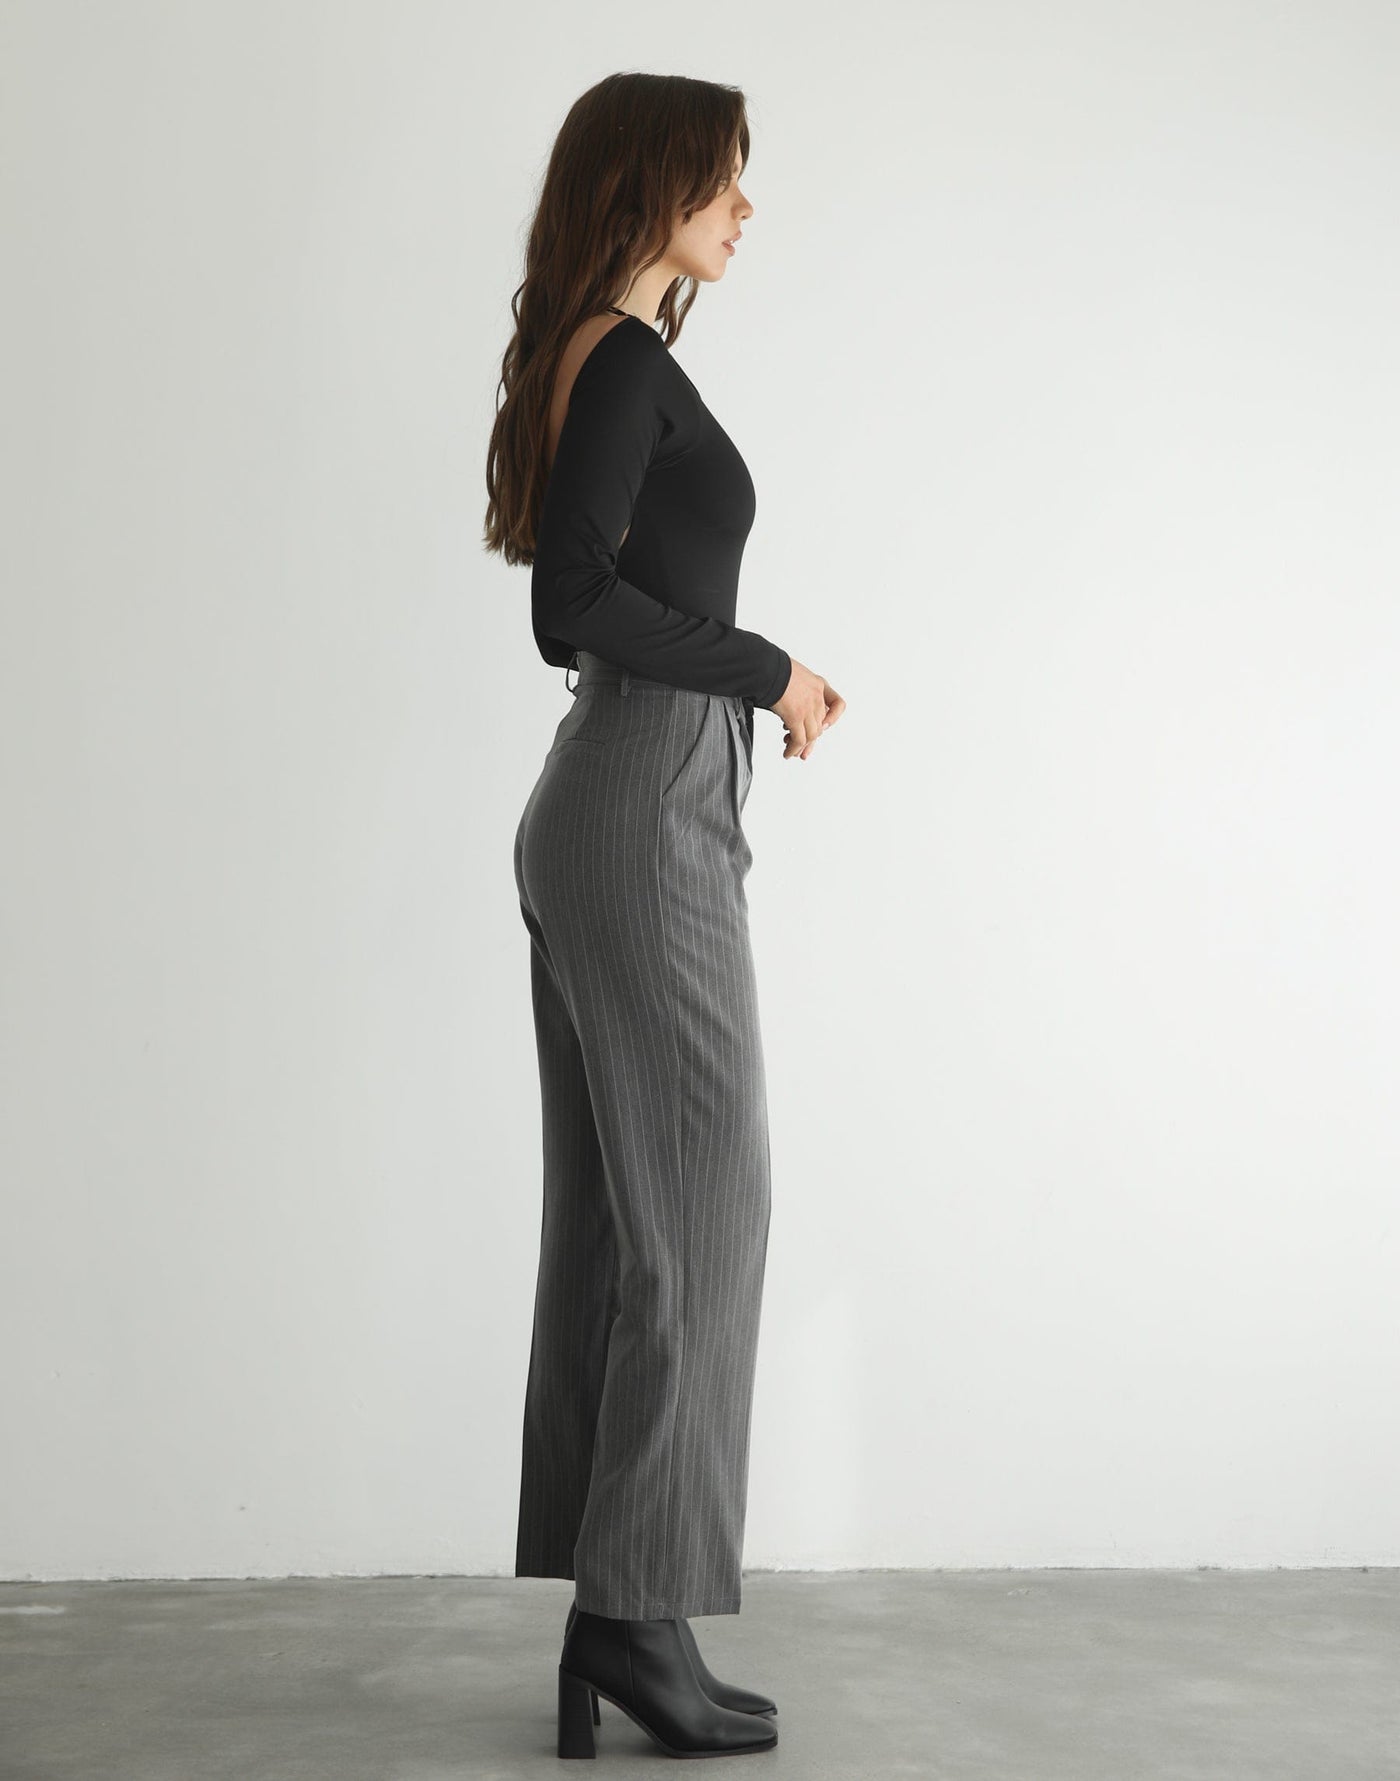 Nicky Bodysuit (Black) - Long Sleeve Backless Bodysuit - Women's Top - Charcoal Clothing